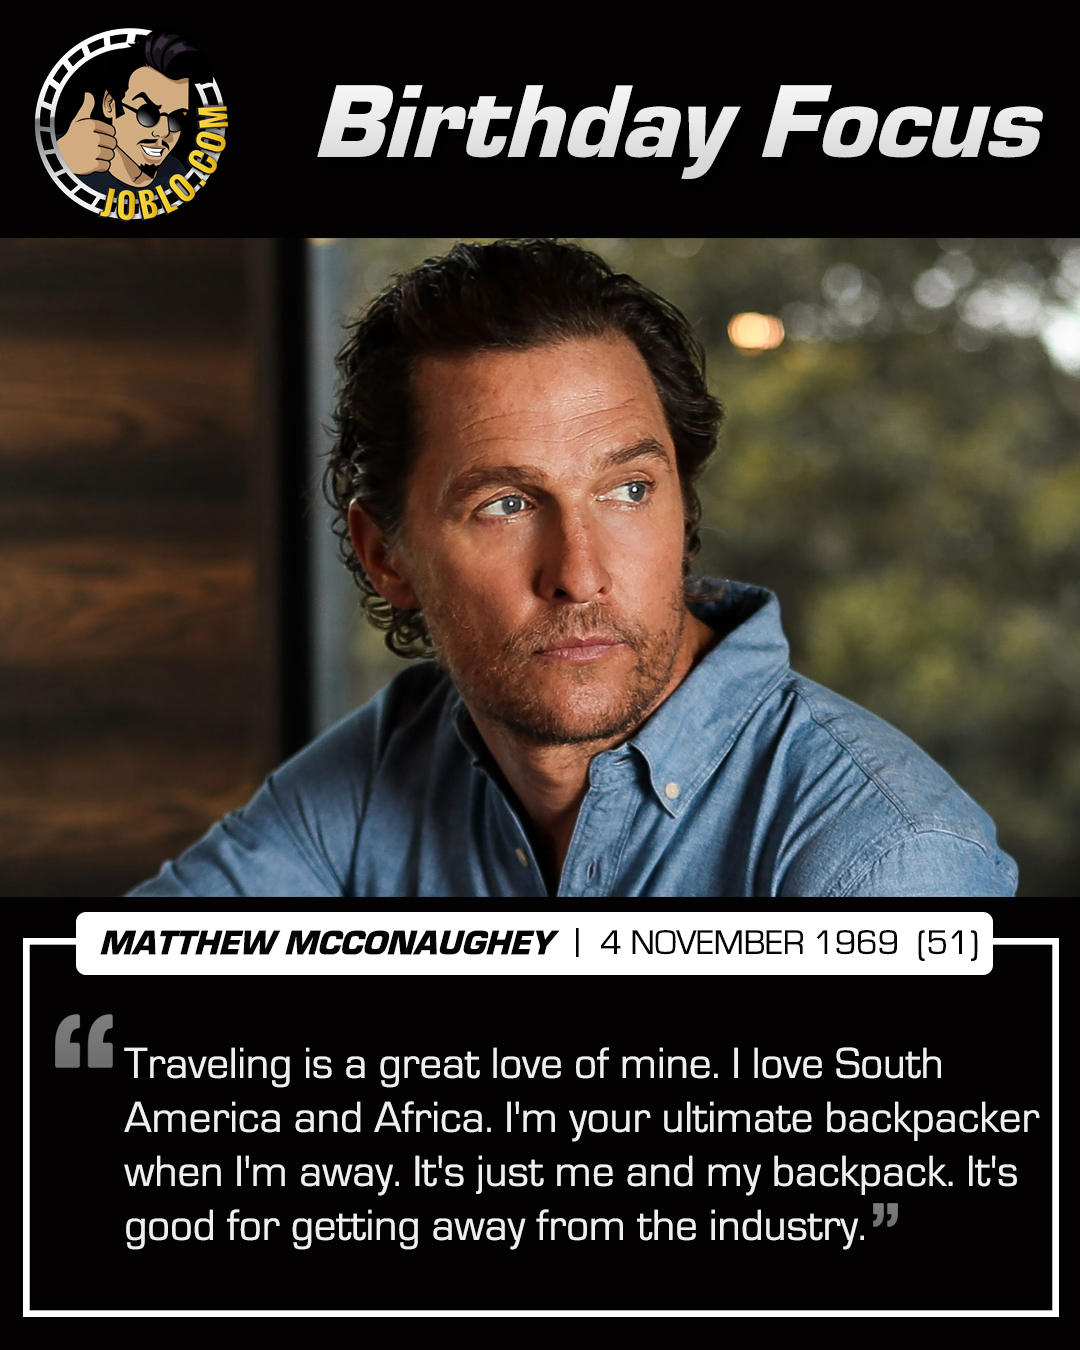 Alright, alright, alright!
Happy 51st birthday to Matthew McConaughey! 